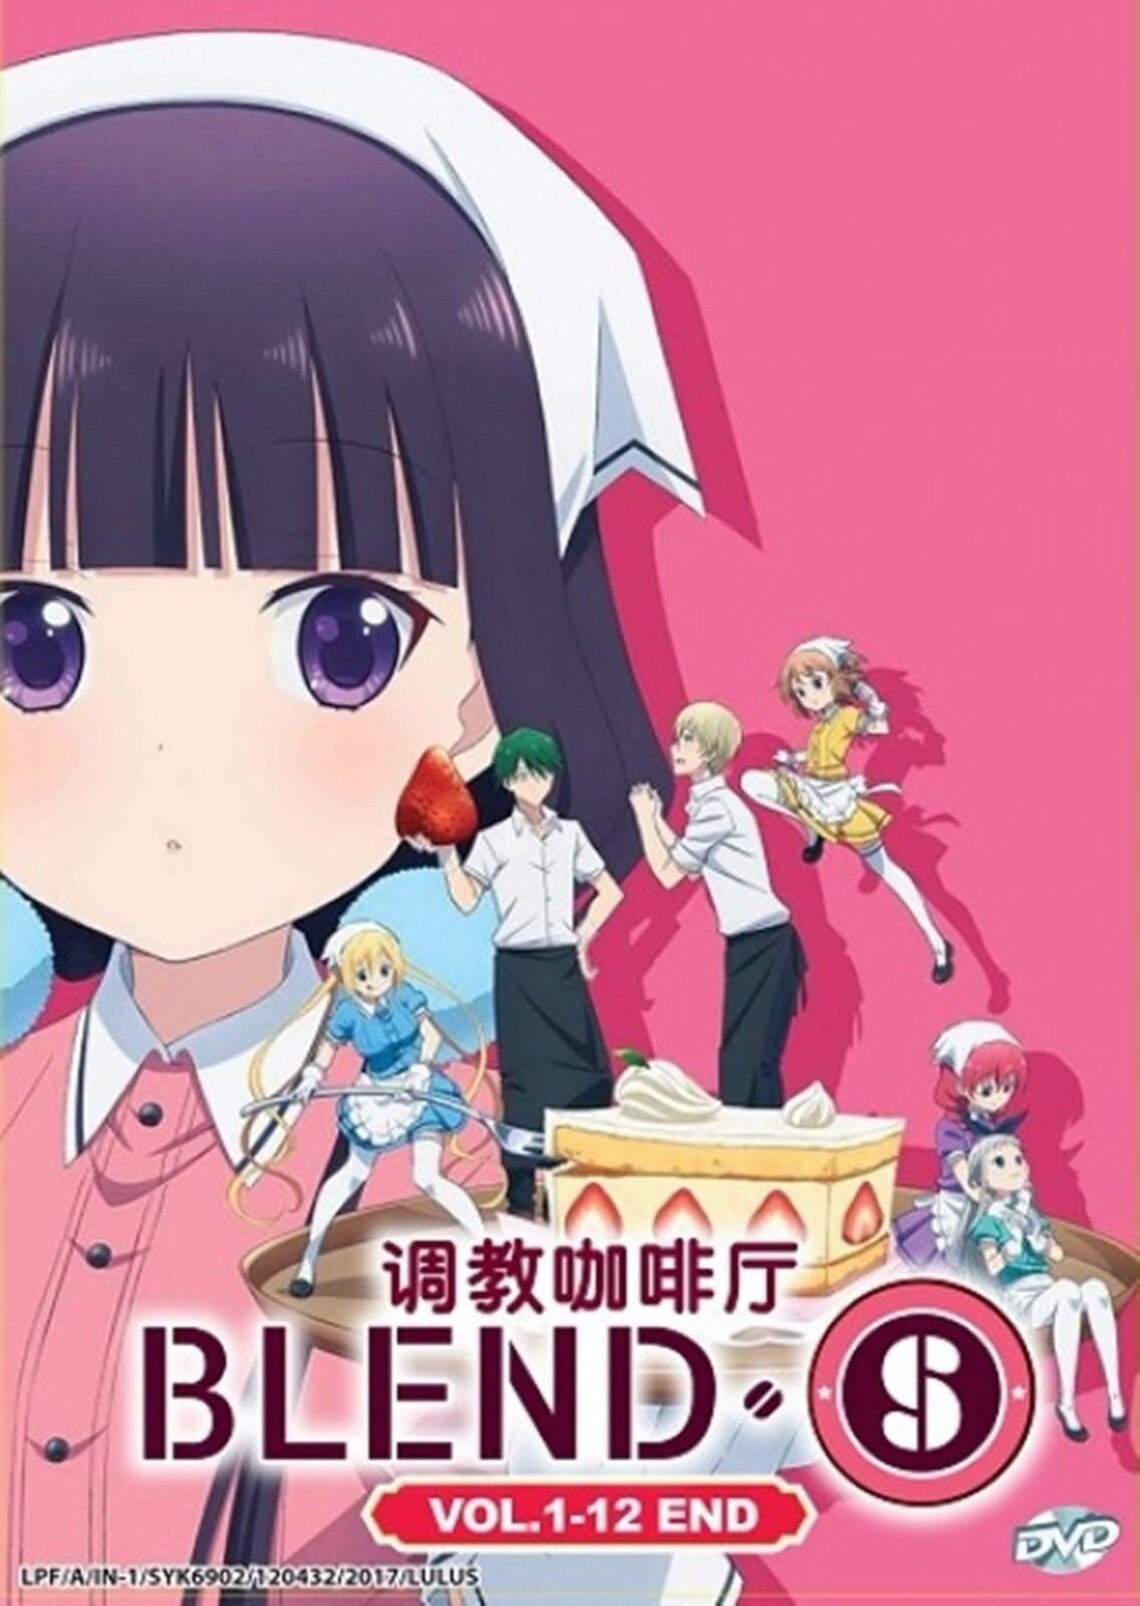 THE MARGINAL SERVICE (1-12End) Anime DVD English subtitle Region